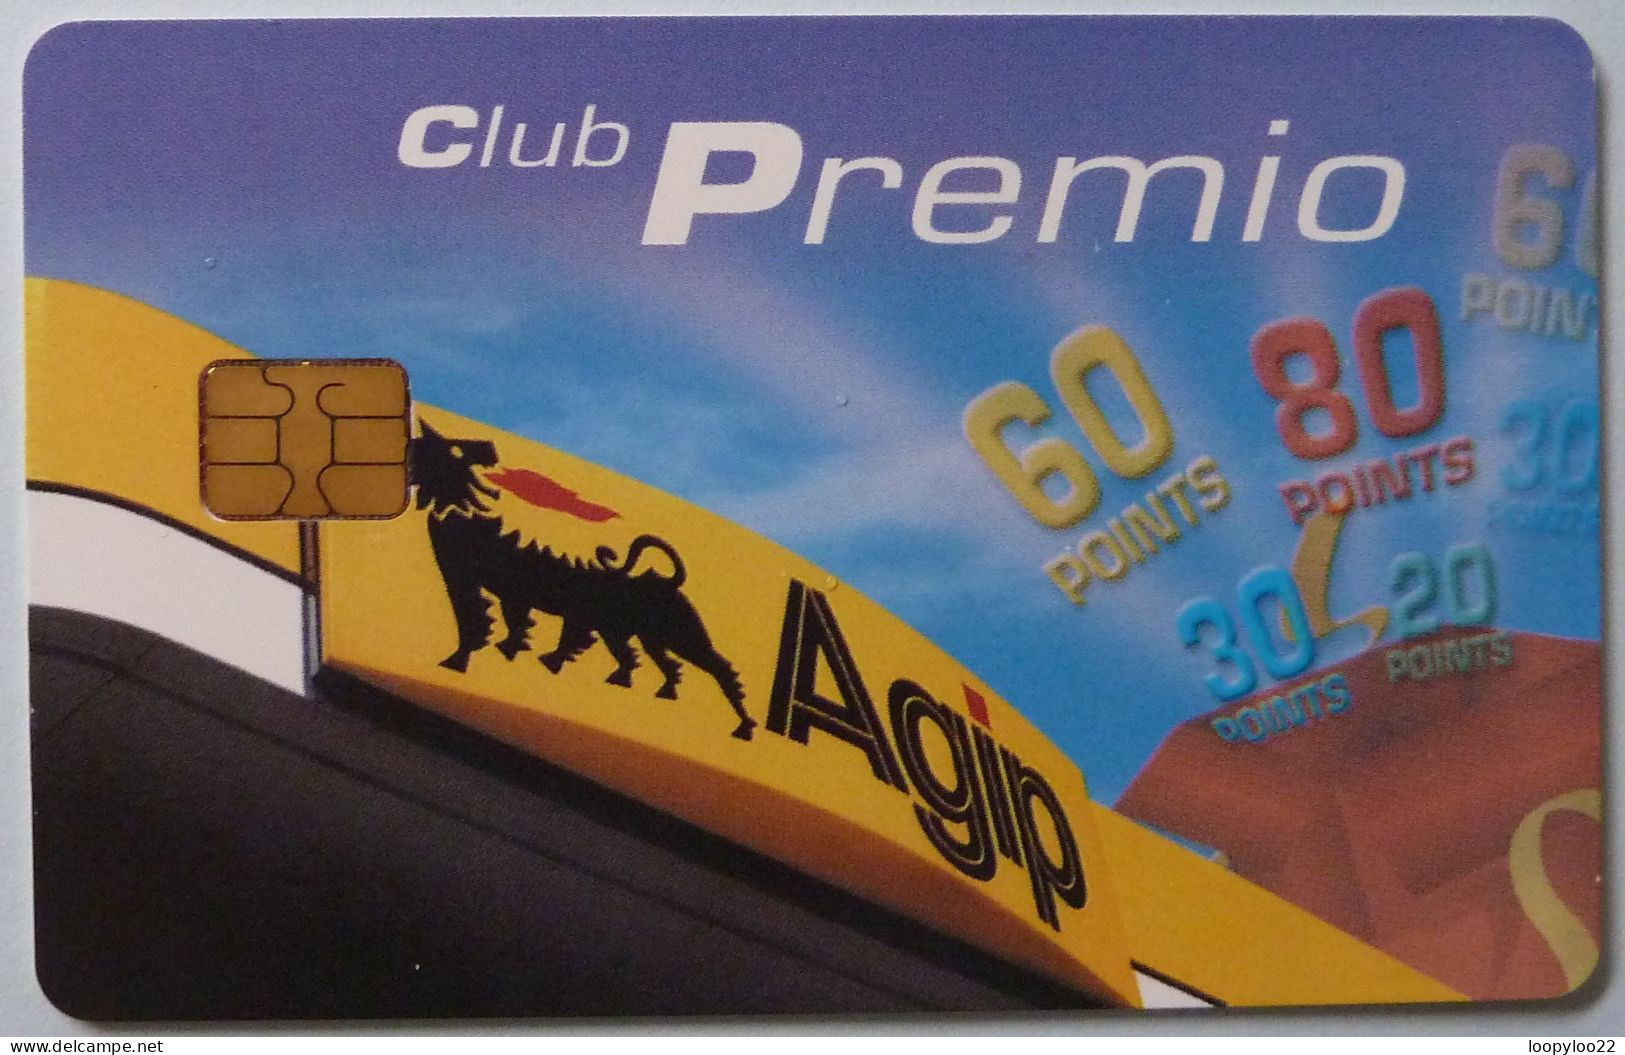 FRANCE - Smartcard - Club Premio - Used - 600 Agences